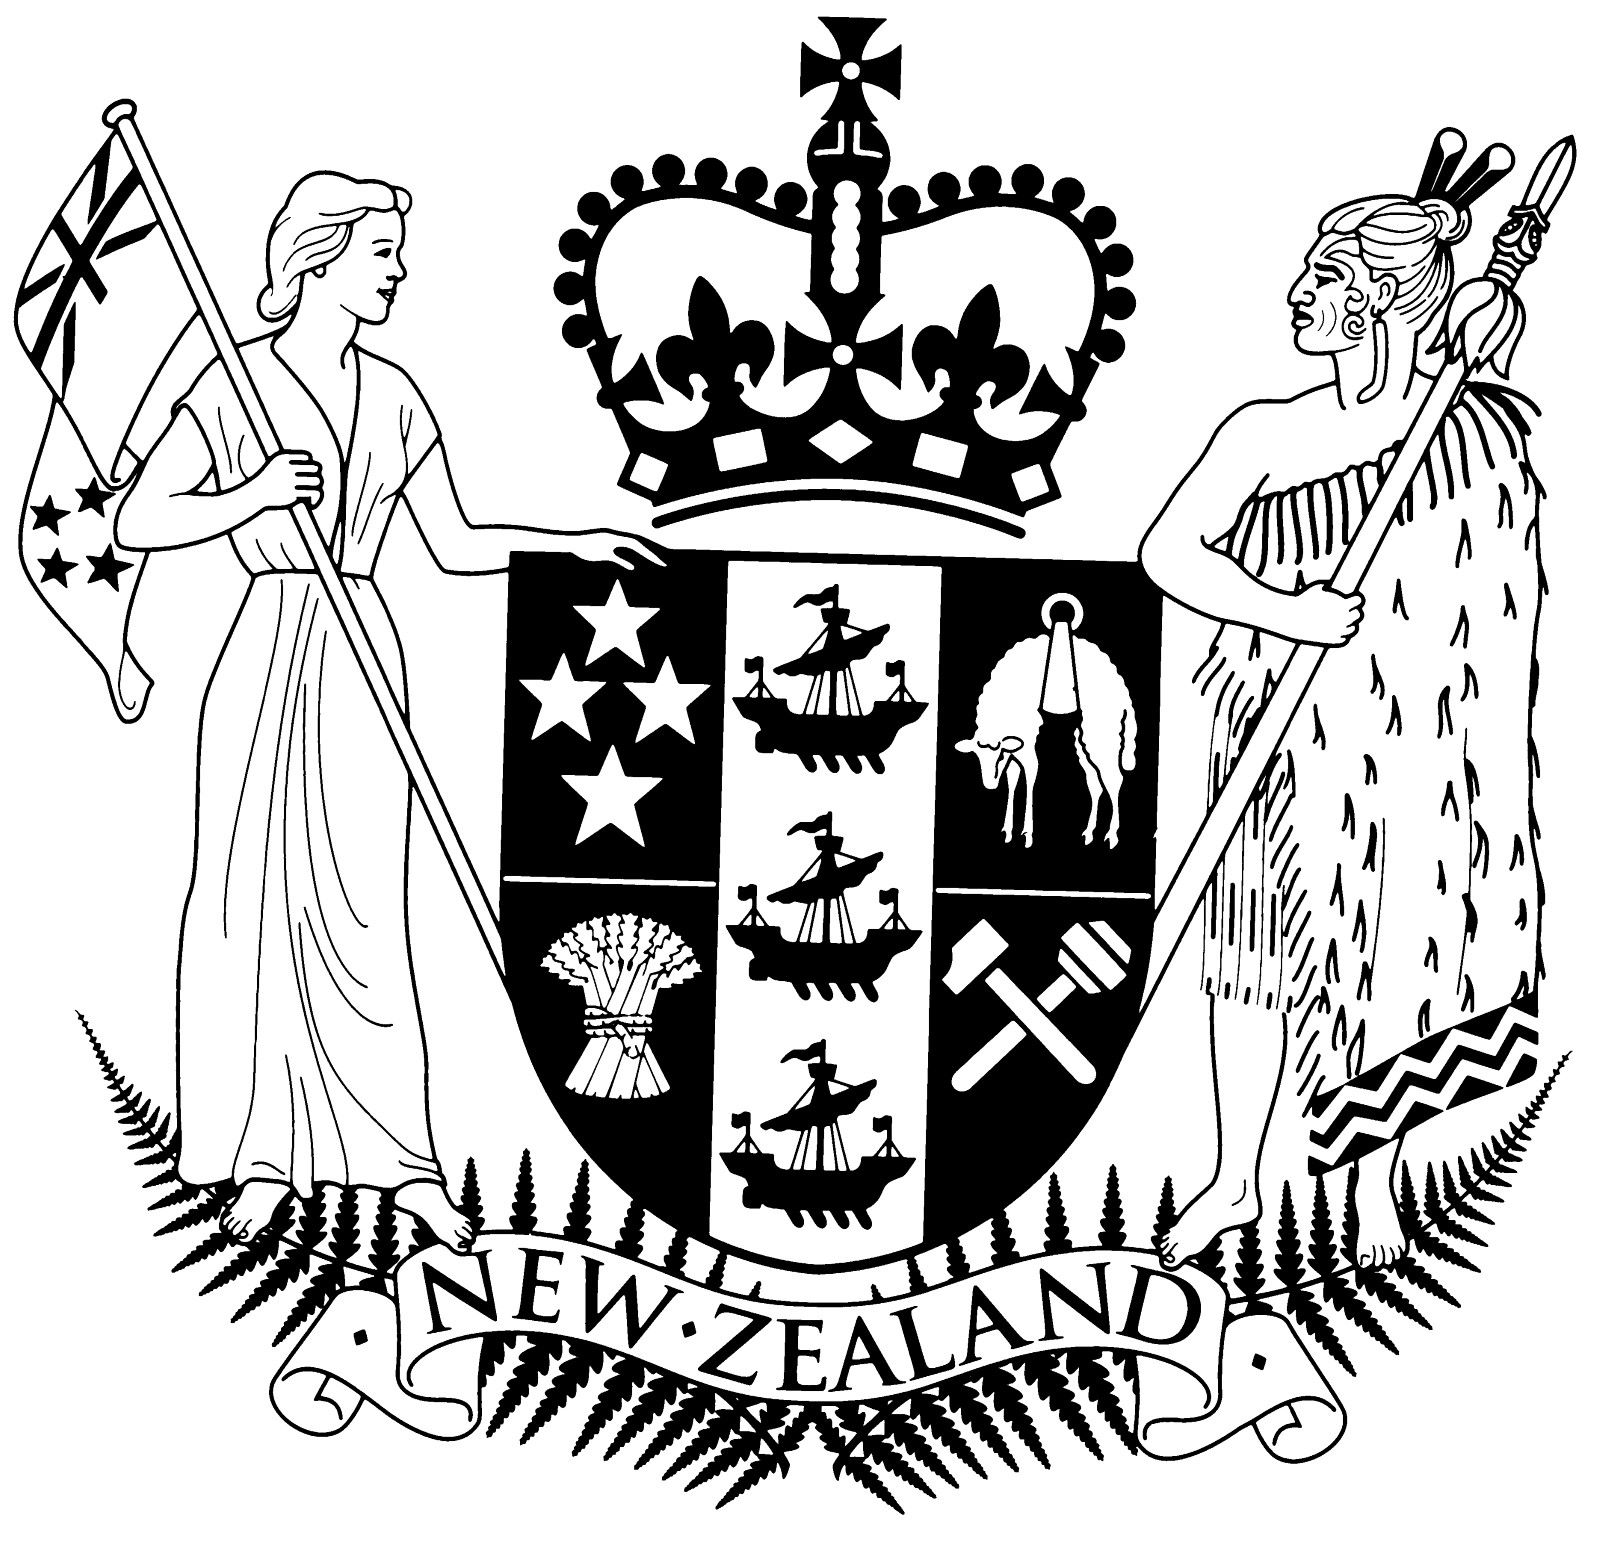 NZ government logo